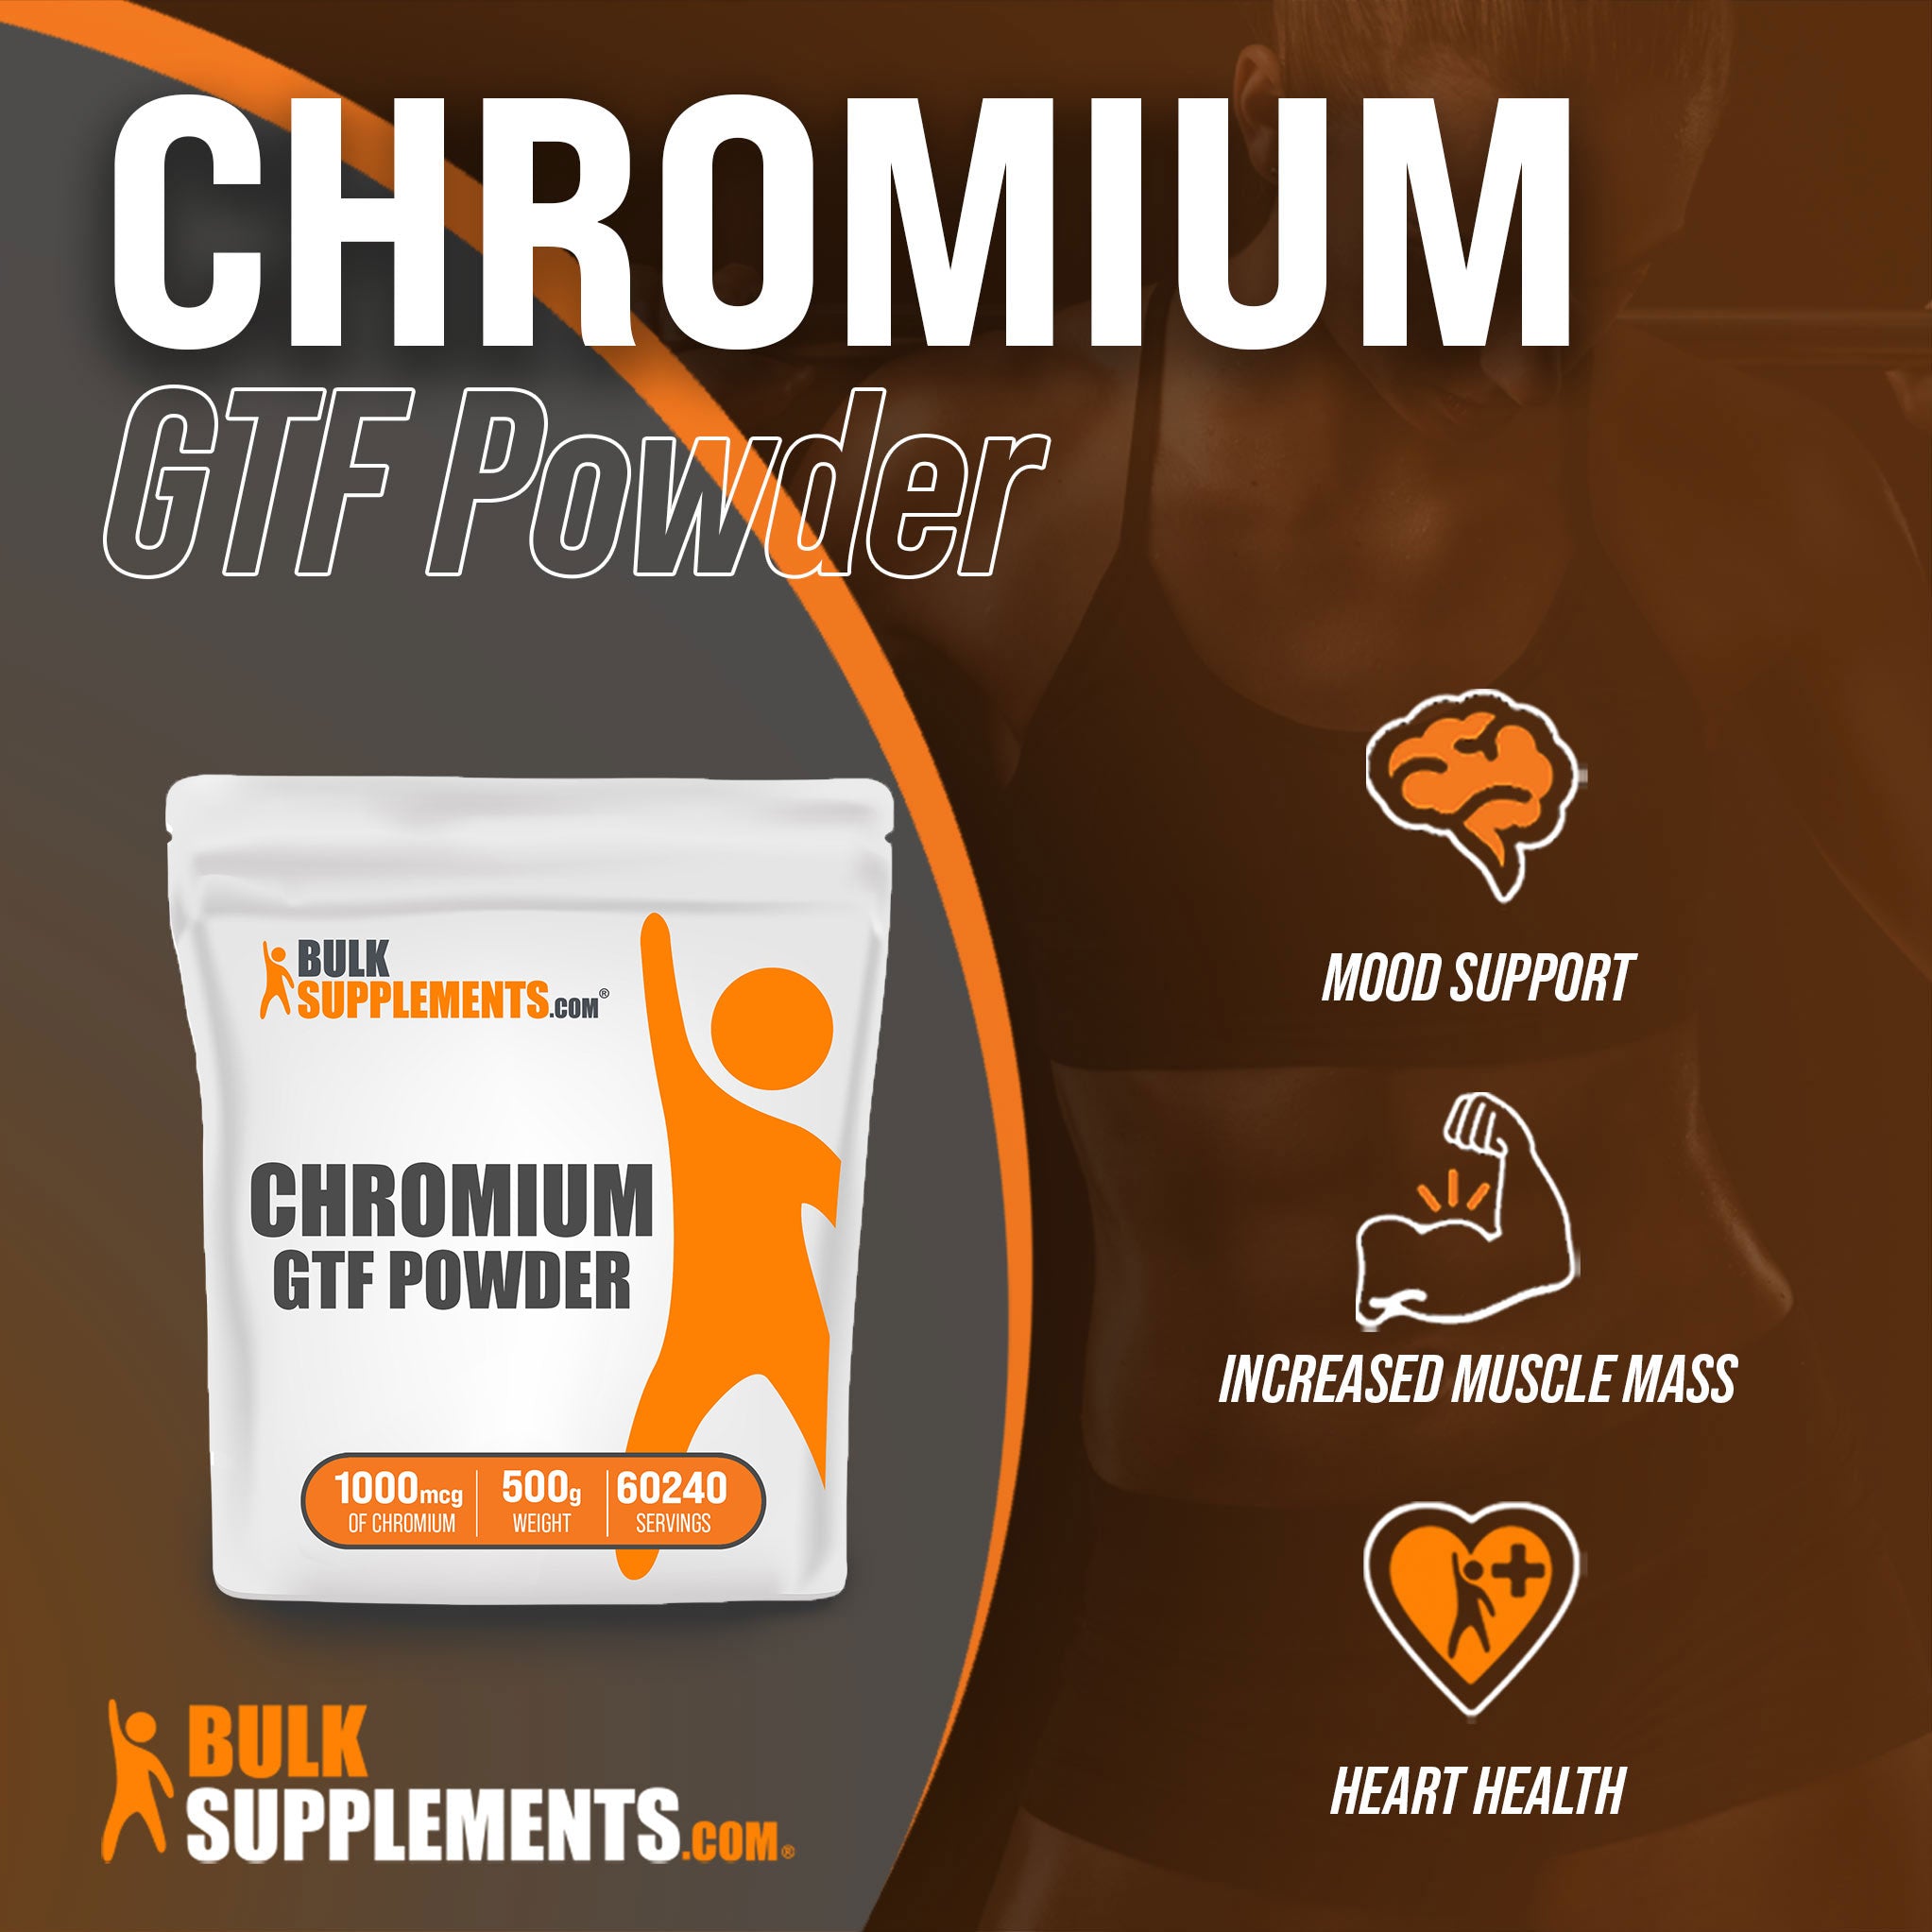 Benefits of 1000mcg Chromium GTF Powder - 500g bag variety